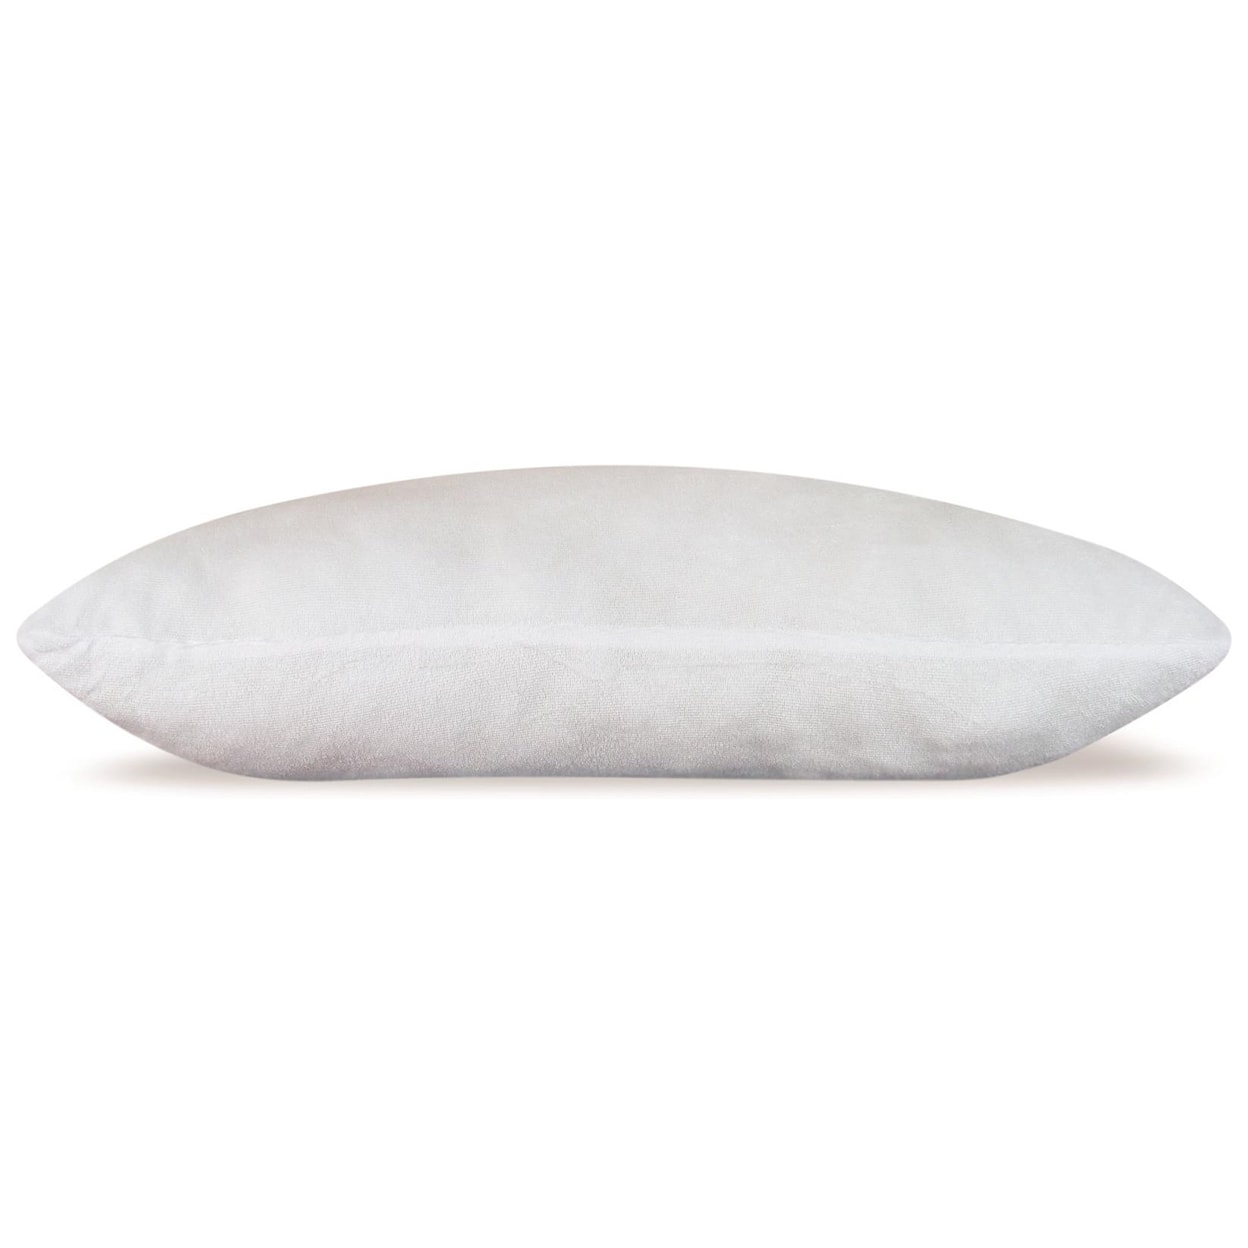 UV3 Masterguard Sleep Rite King Pillow